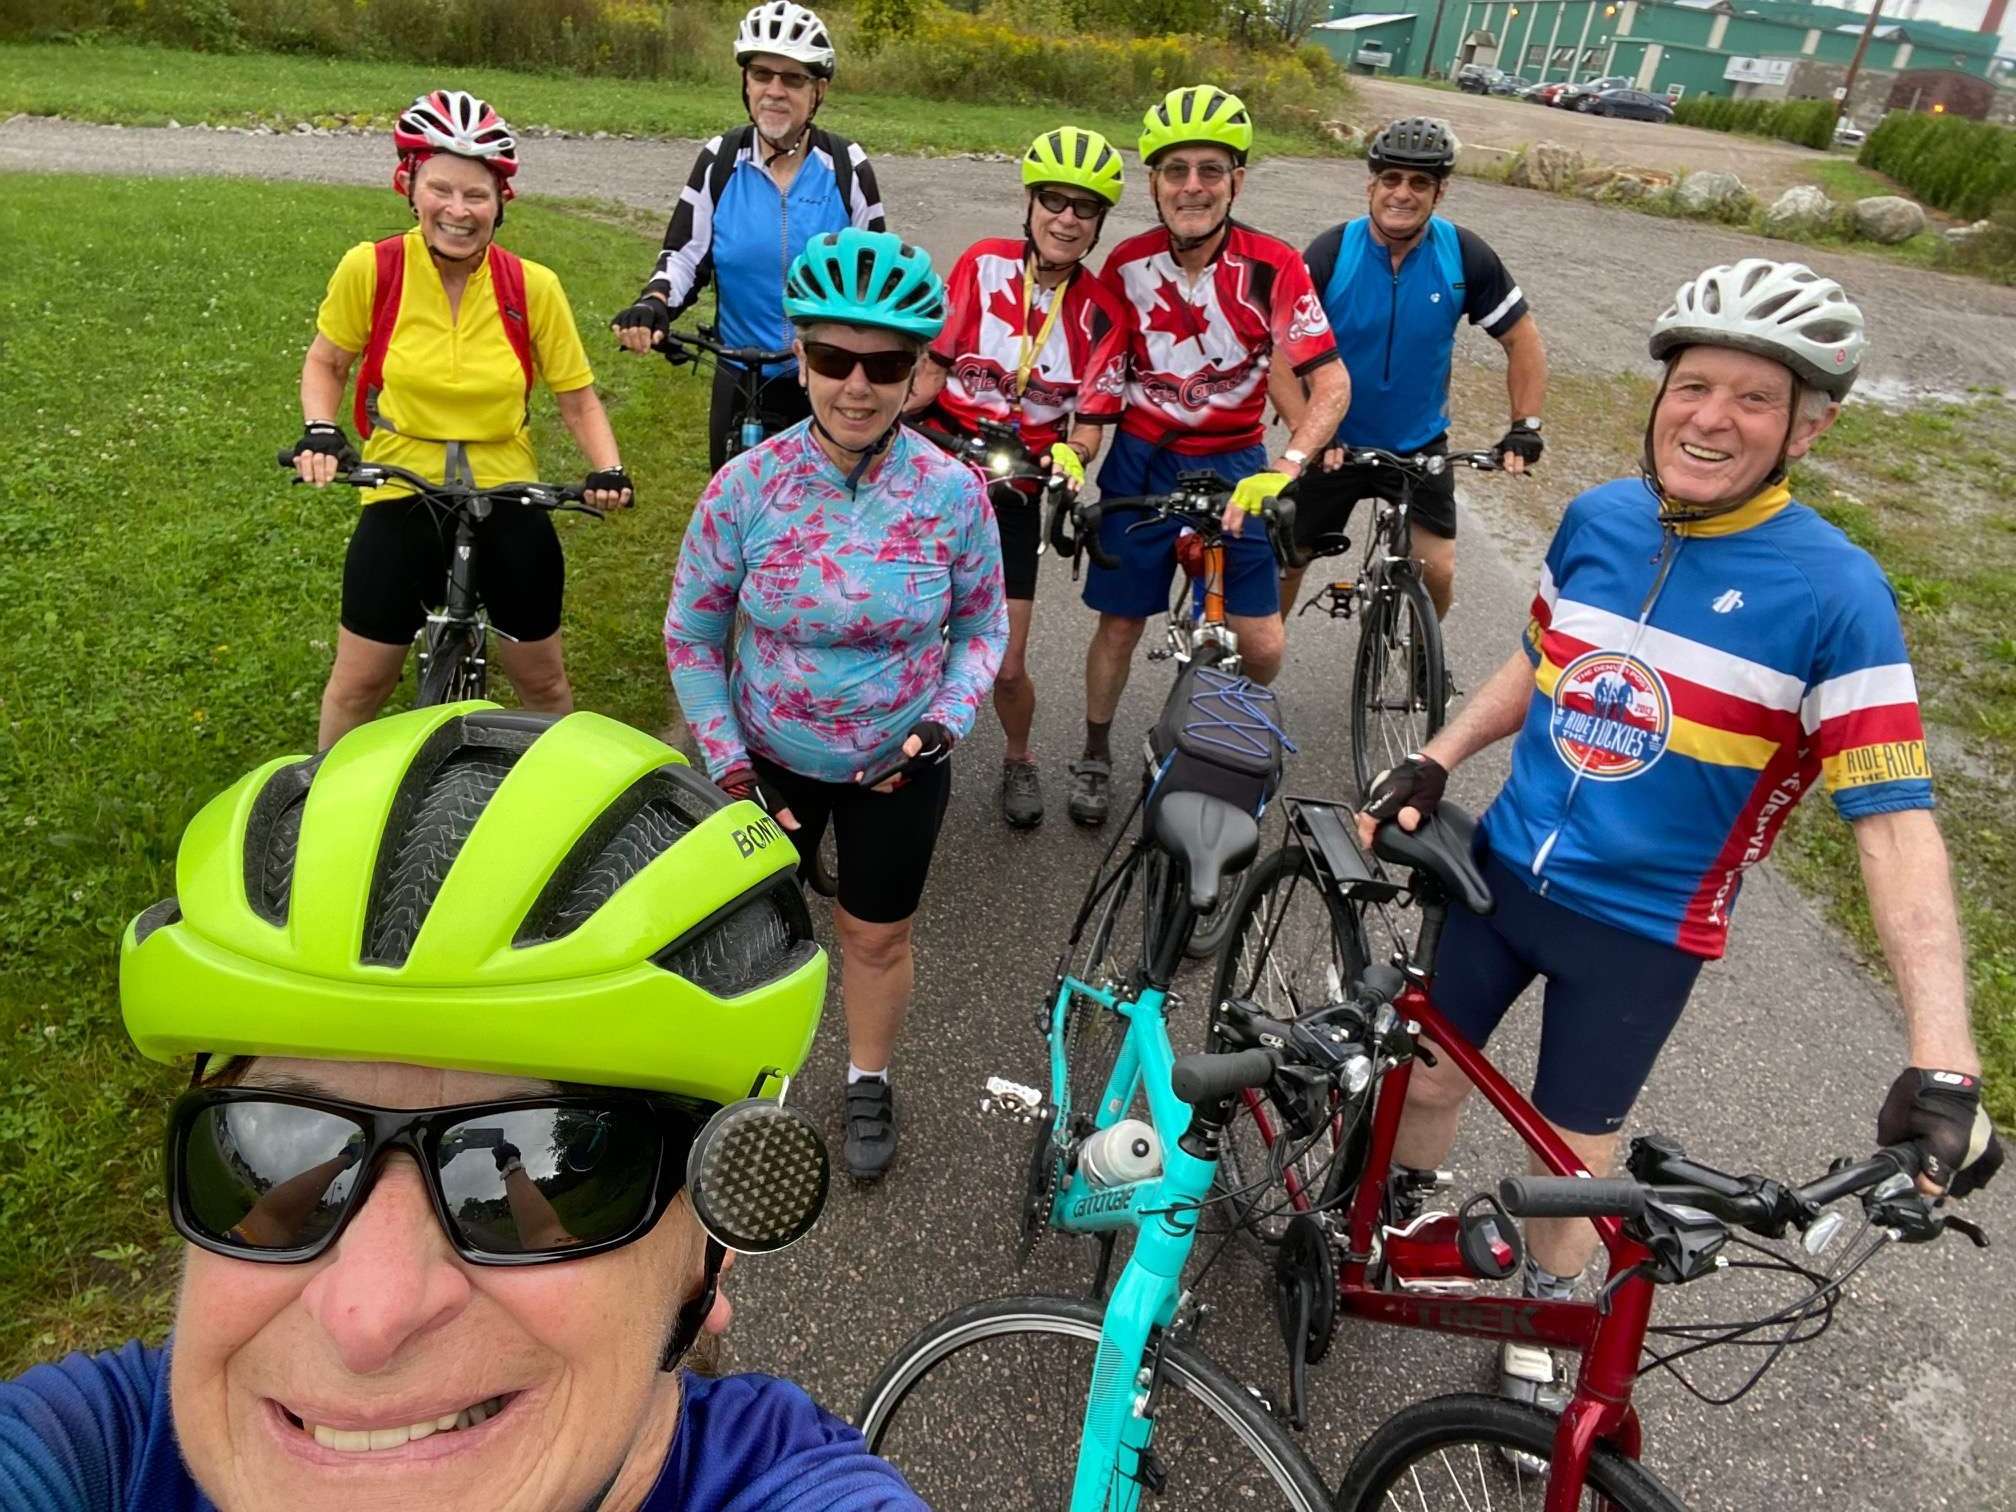 Group selfie of the riders